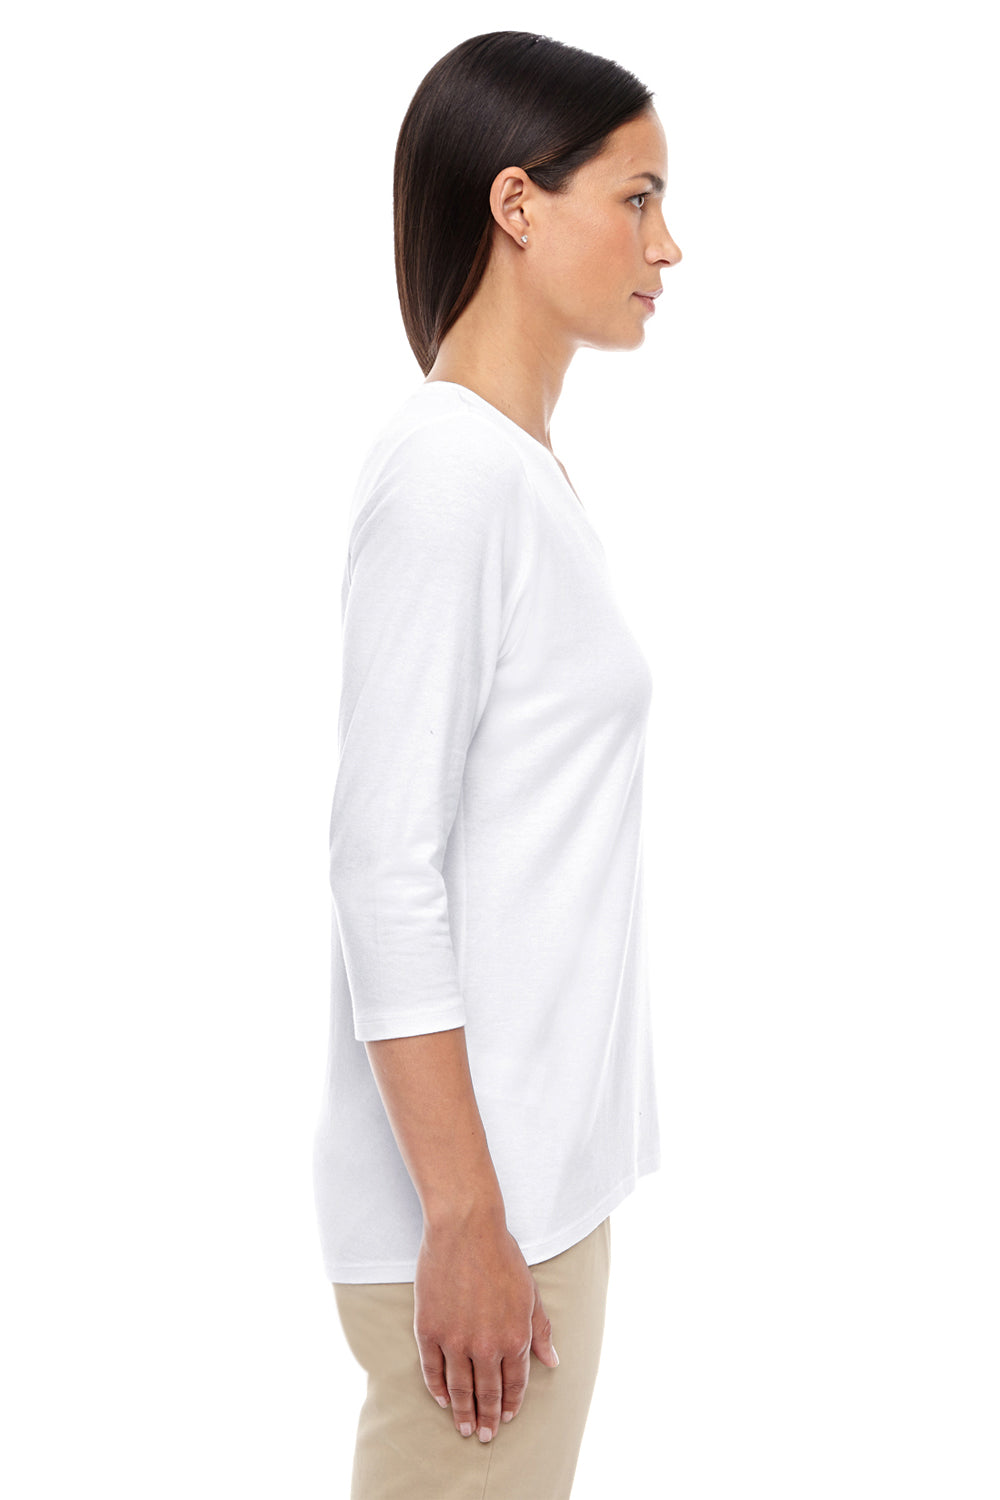 Devon & Jones DP184W Womens Perfect Fit 3/4 Sleeve V-Neck T-Shirt White Side